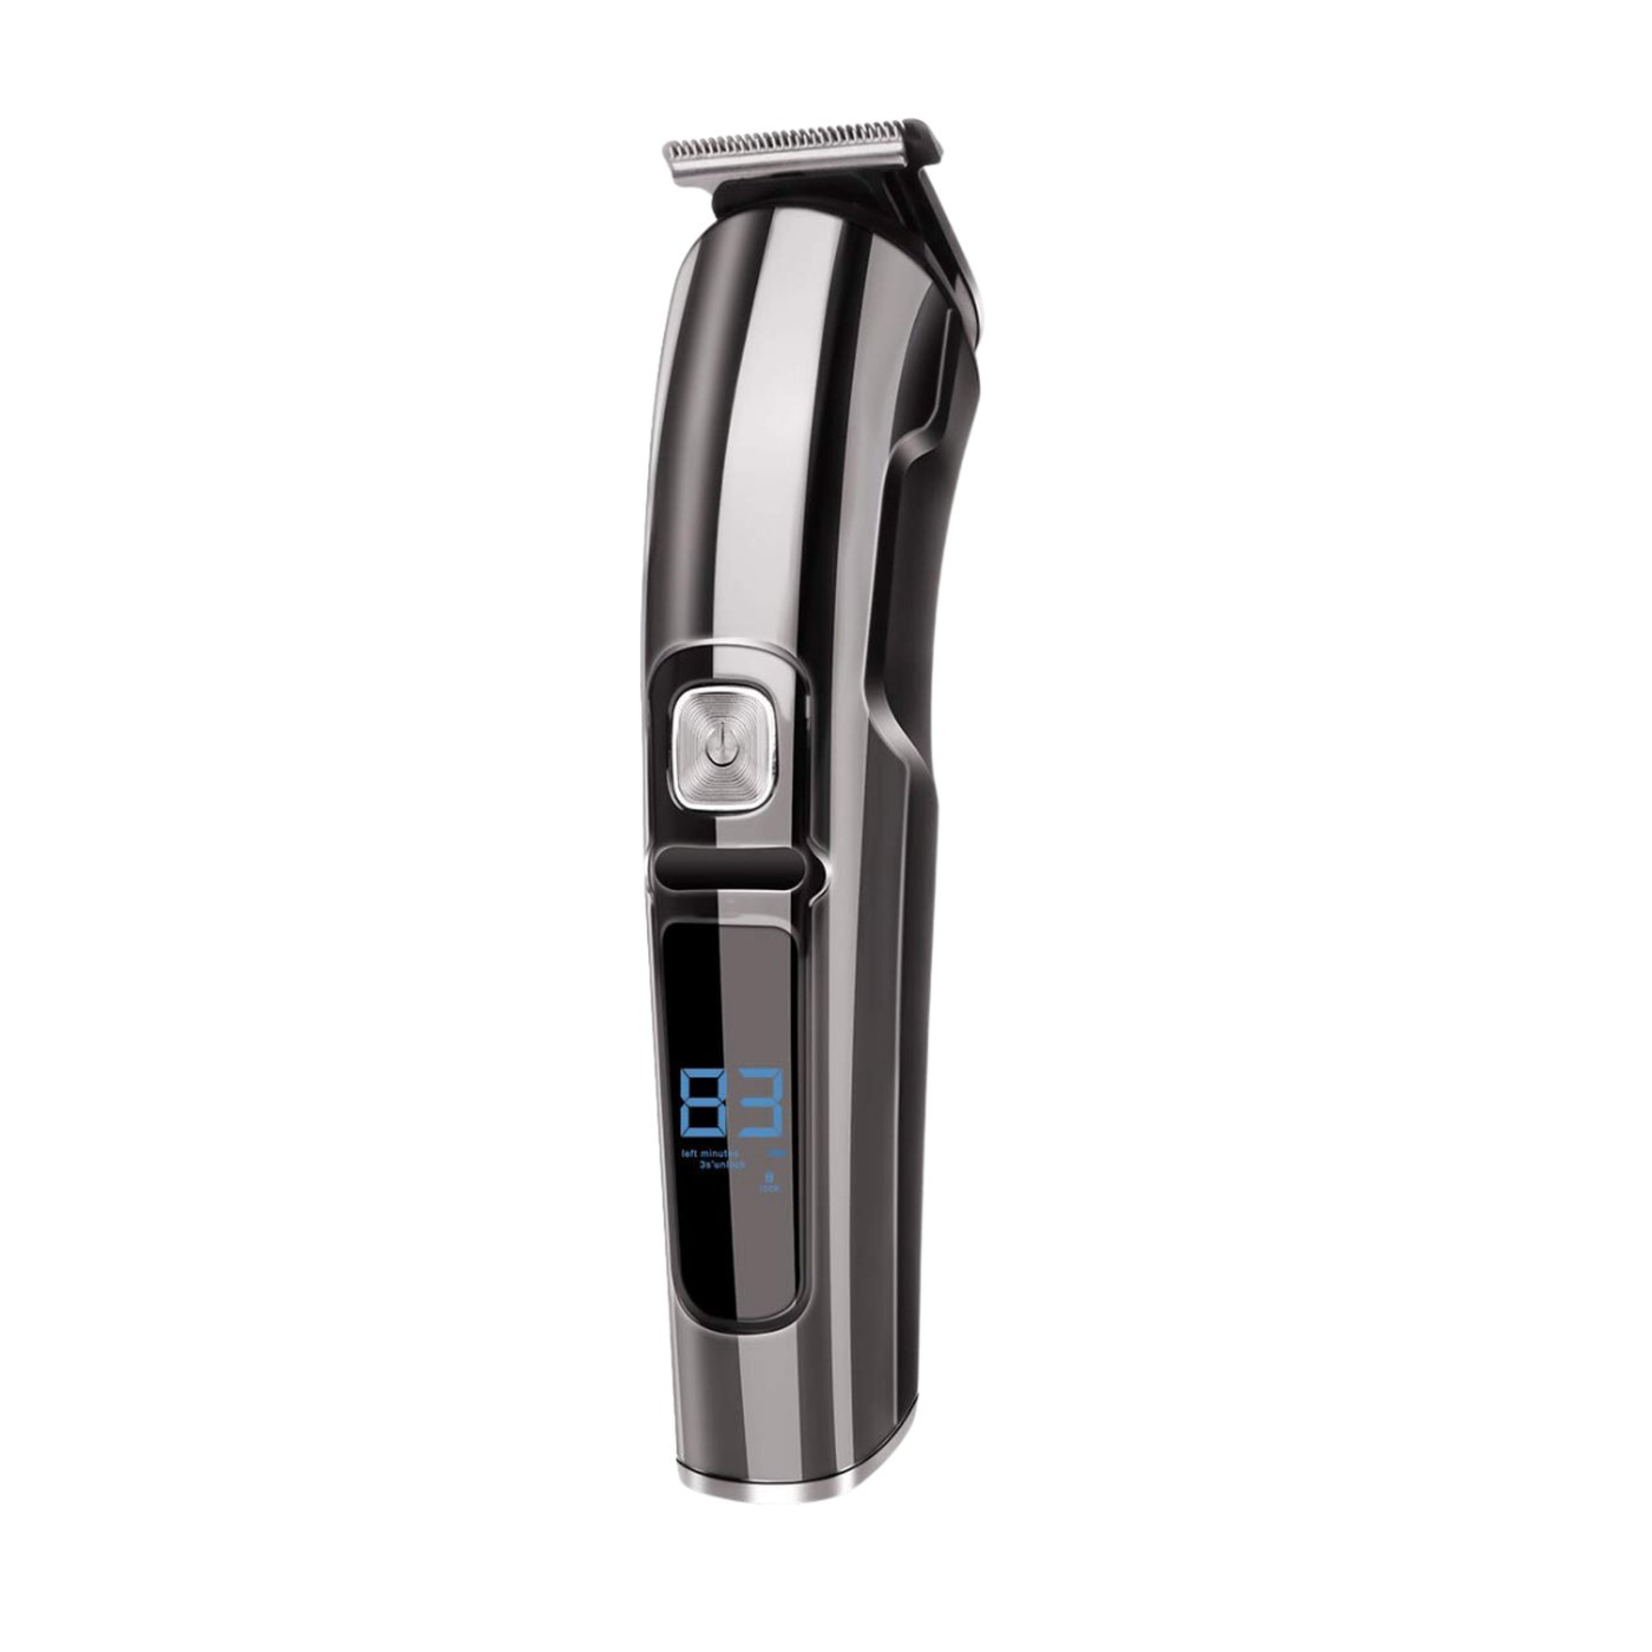 MHZ Professional clippers - Bodygroomer - Men - Beard trimmer - Black trimmer